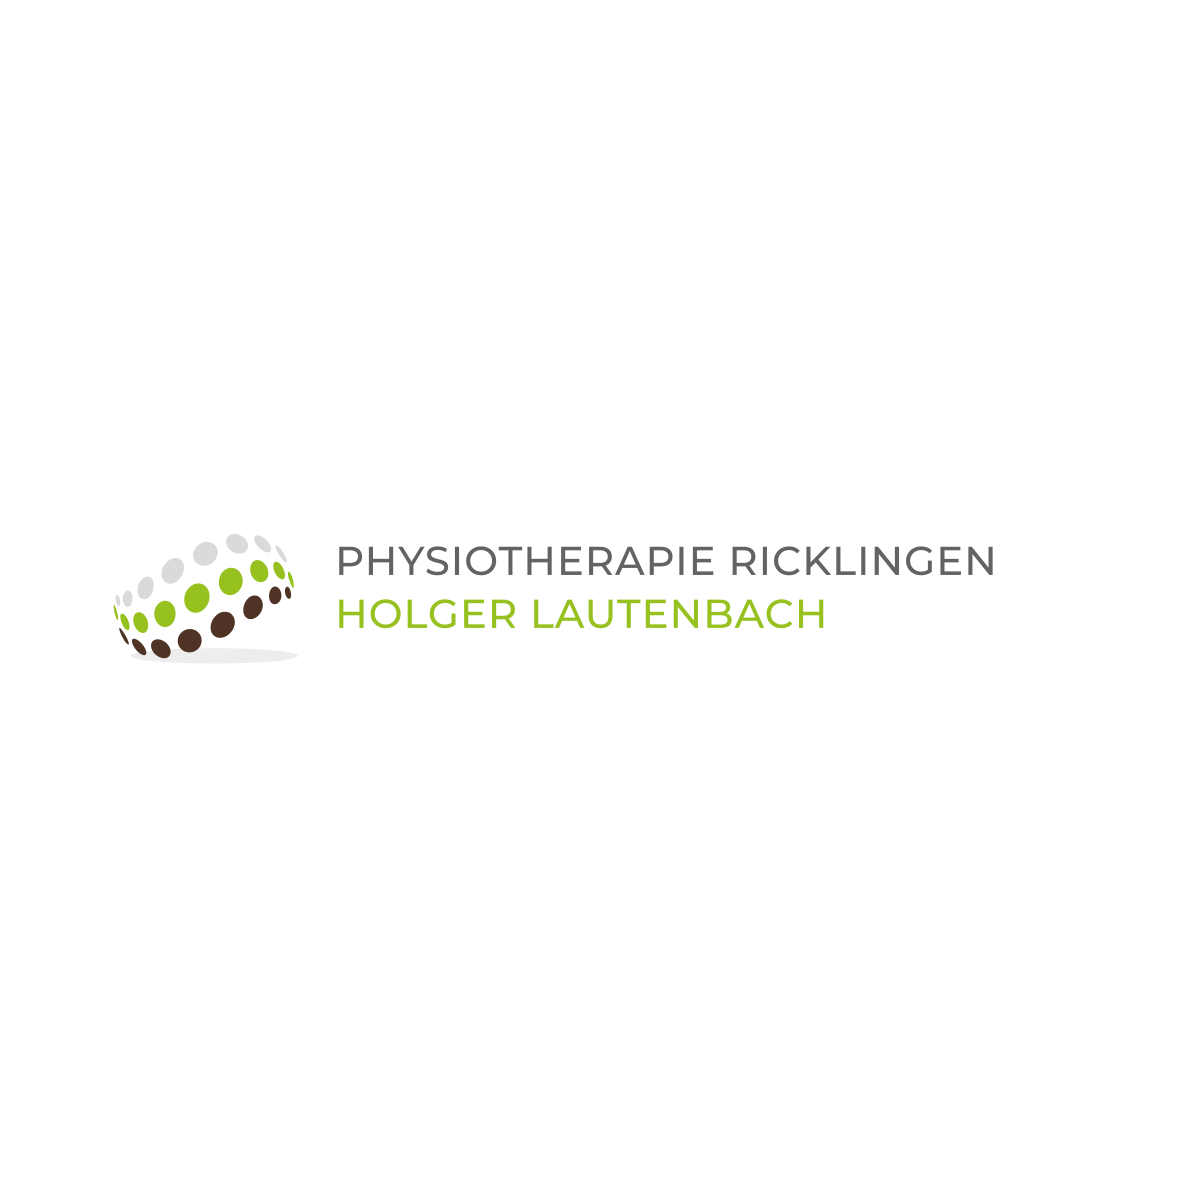 Physiotherapie Ricklingen Holger Lautenbach in Hannover - Logo